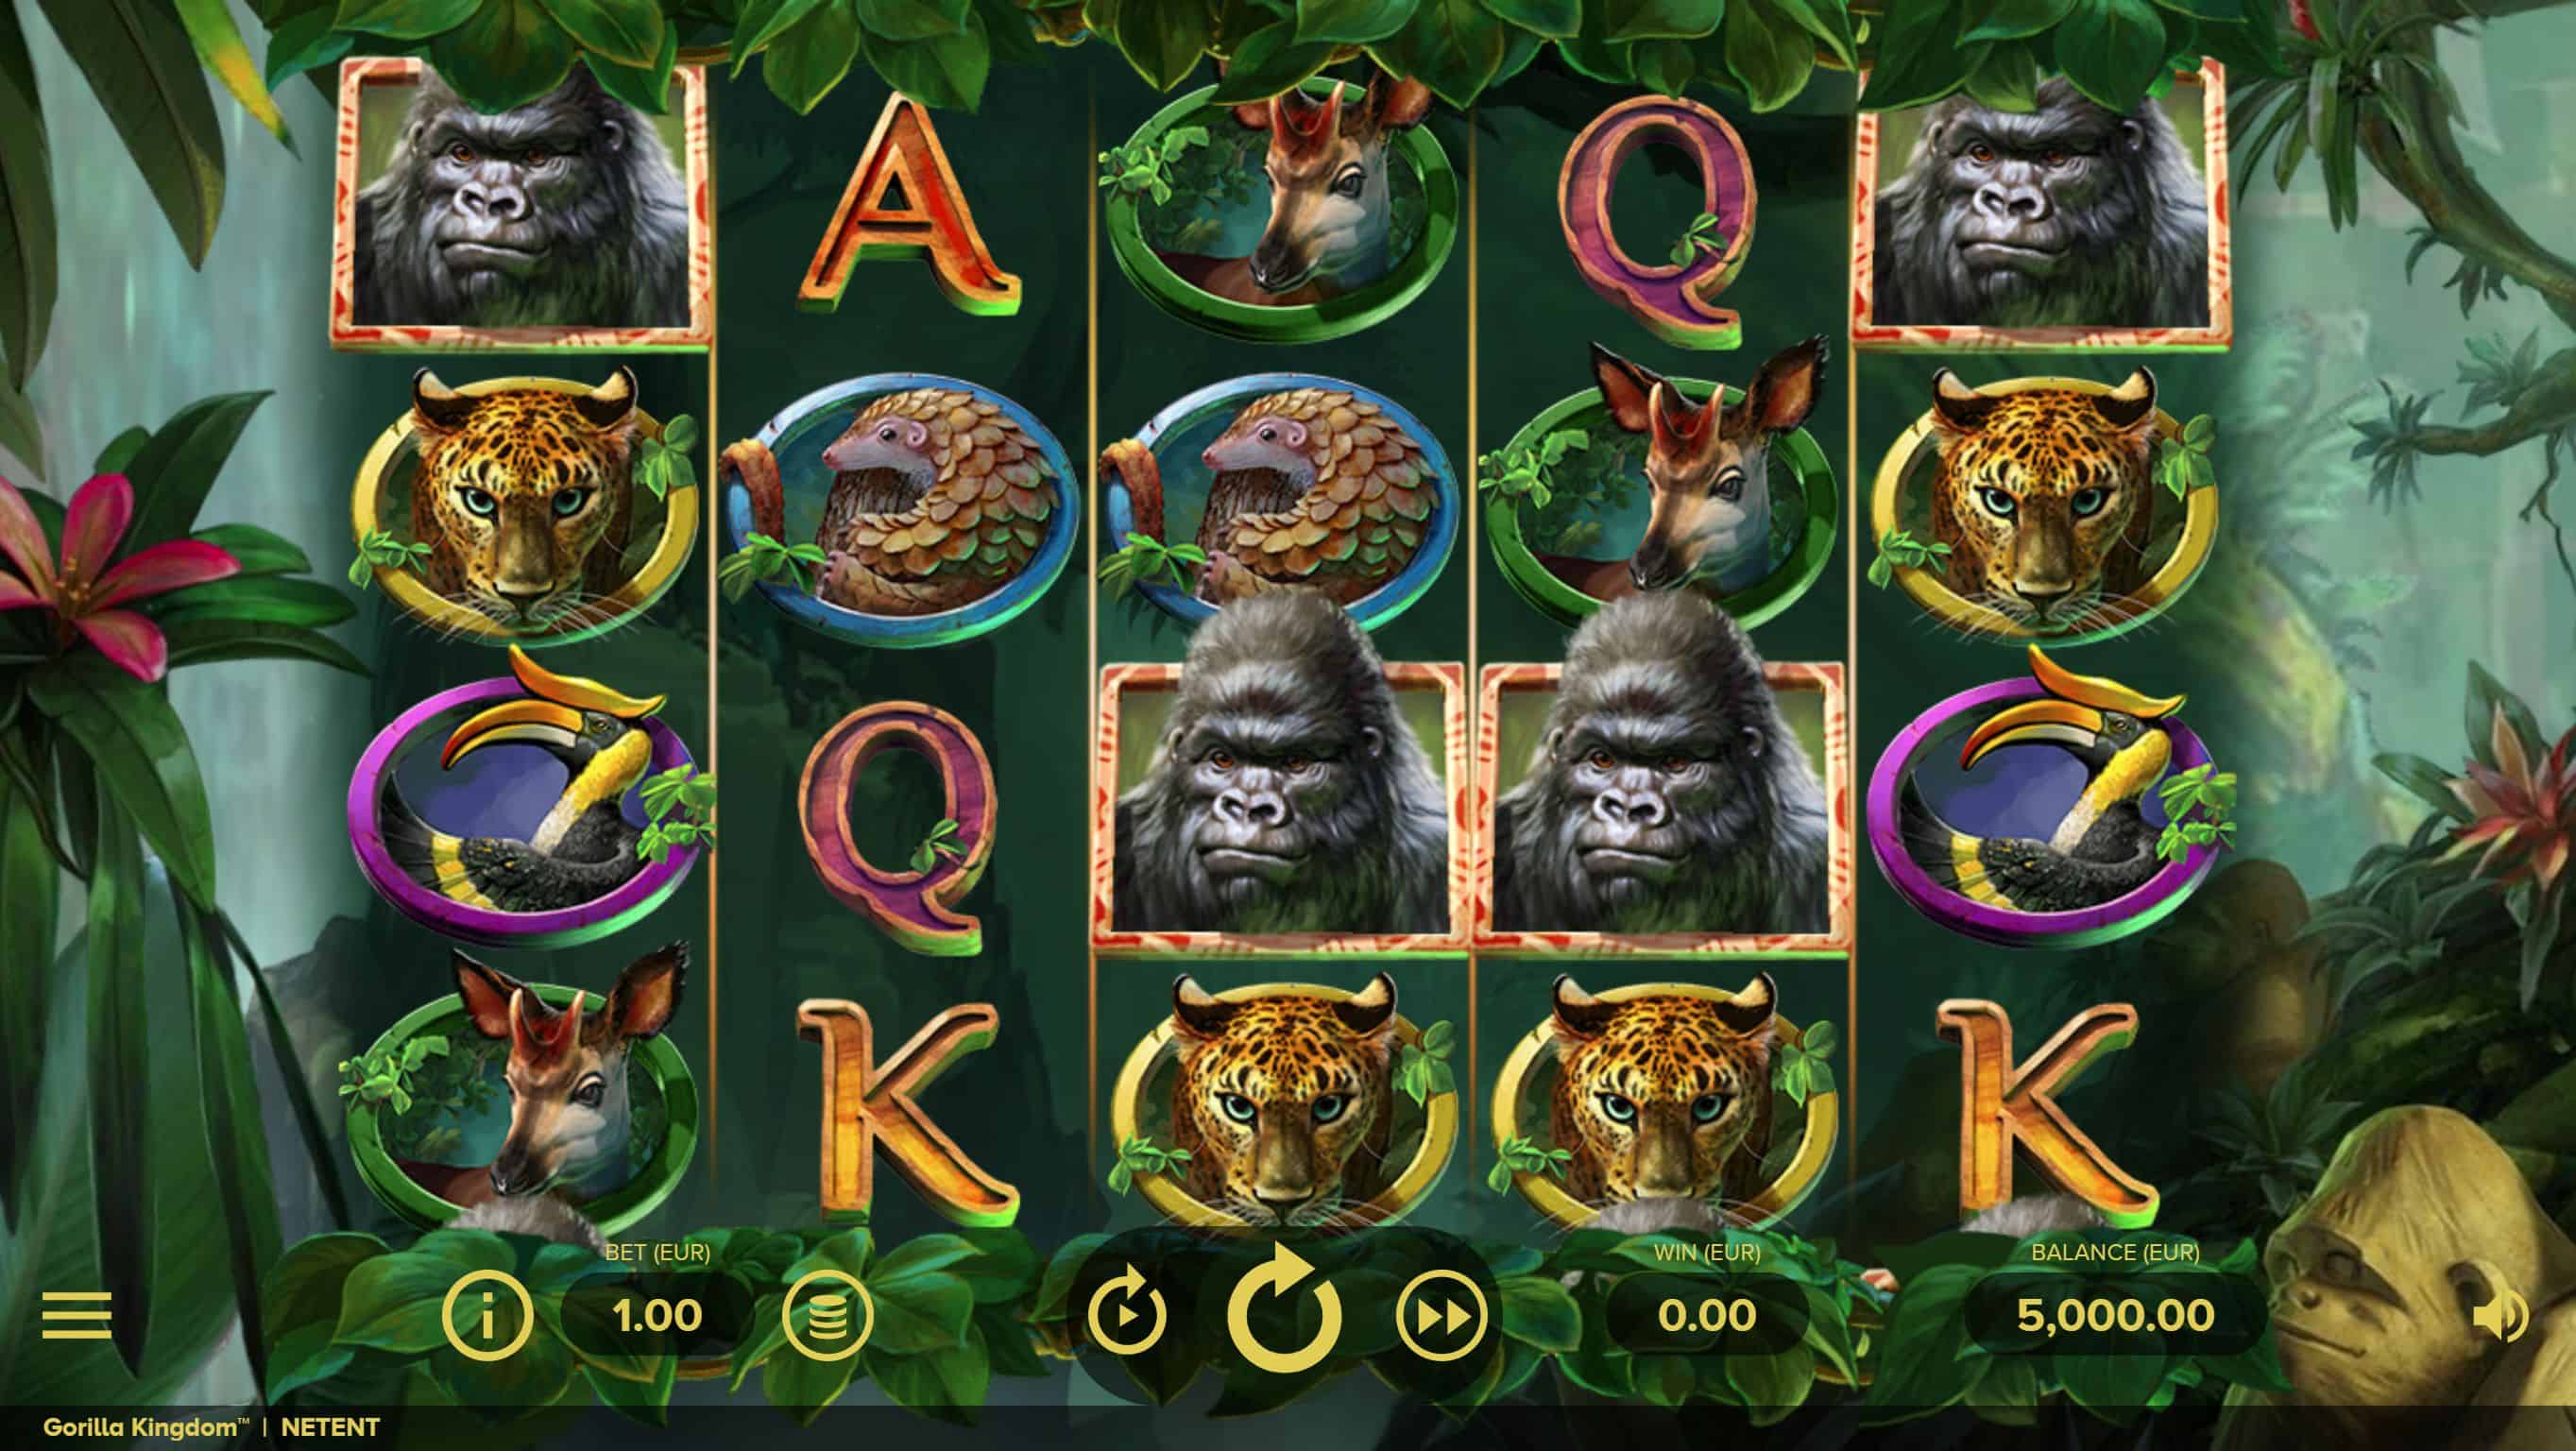 Gorilla Kingdom Slot Game Free Play at Casino Ireland 01